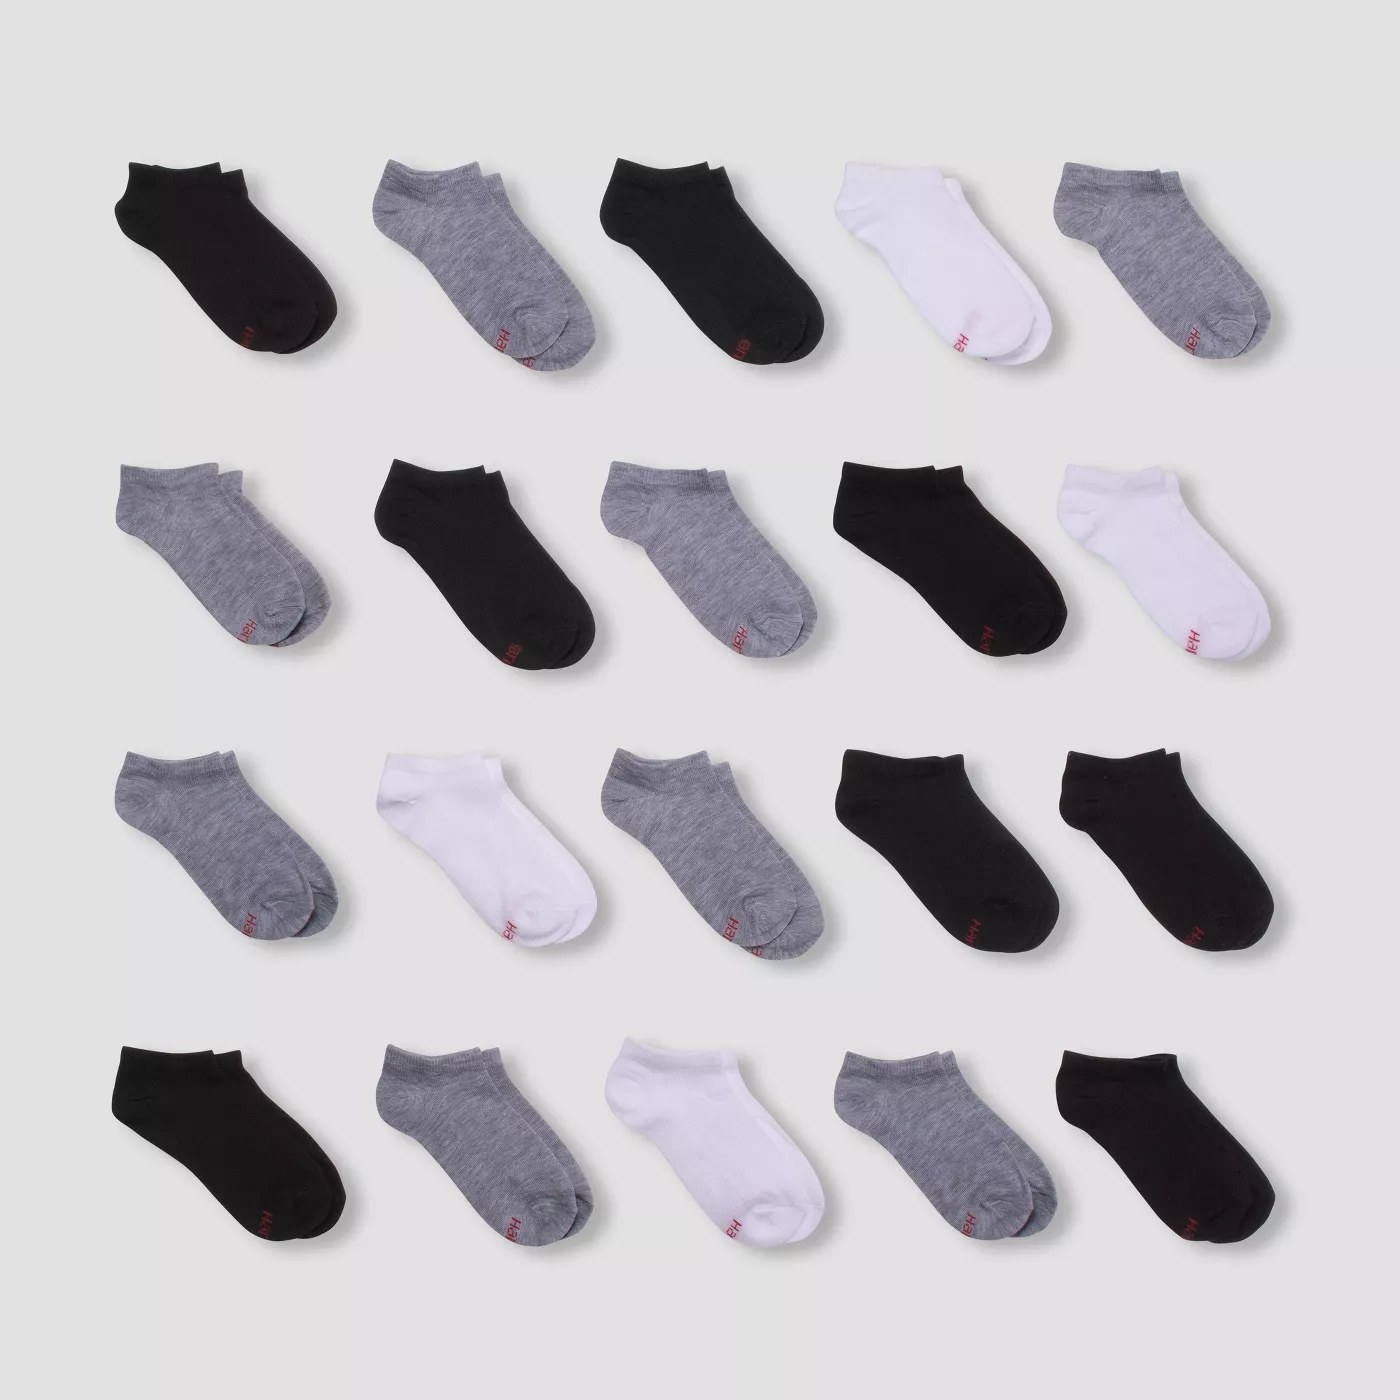 The black, gray, and white socks